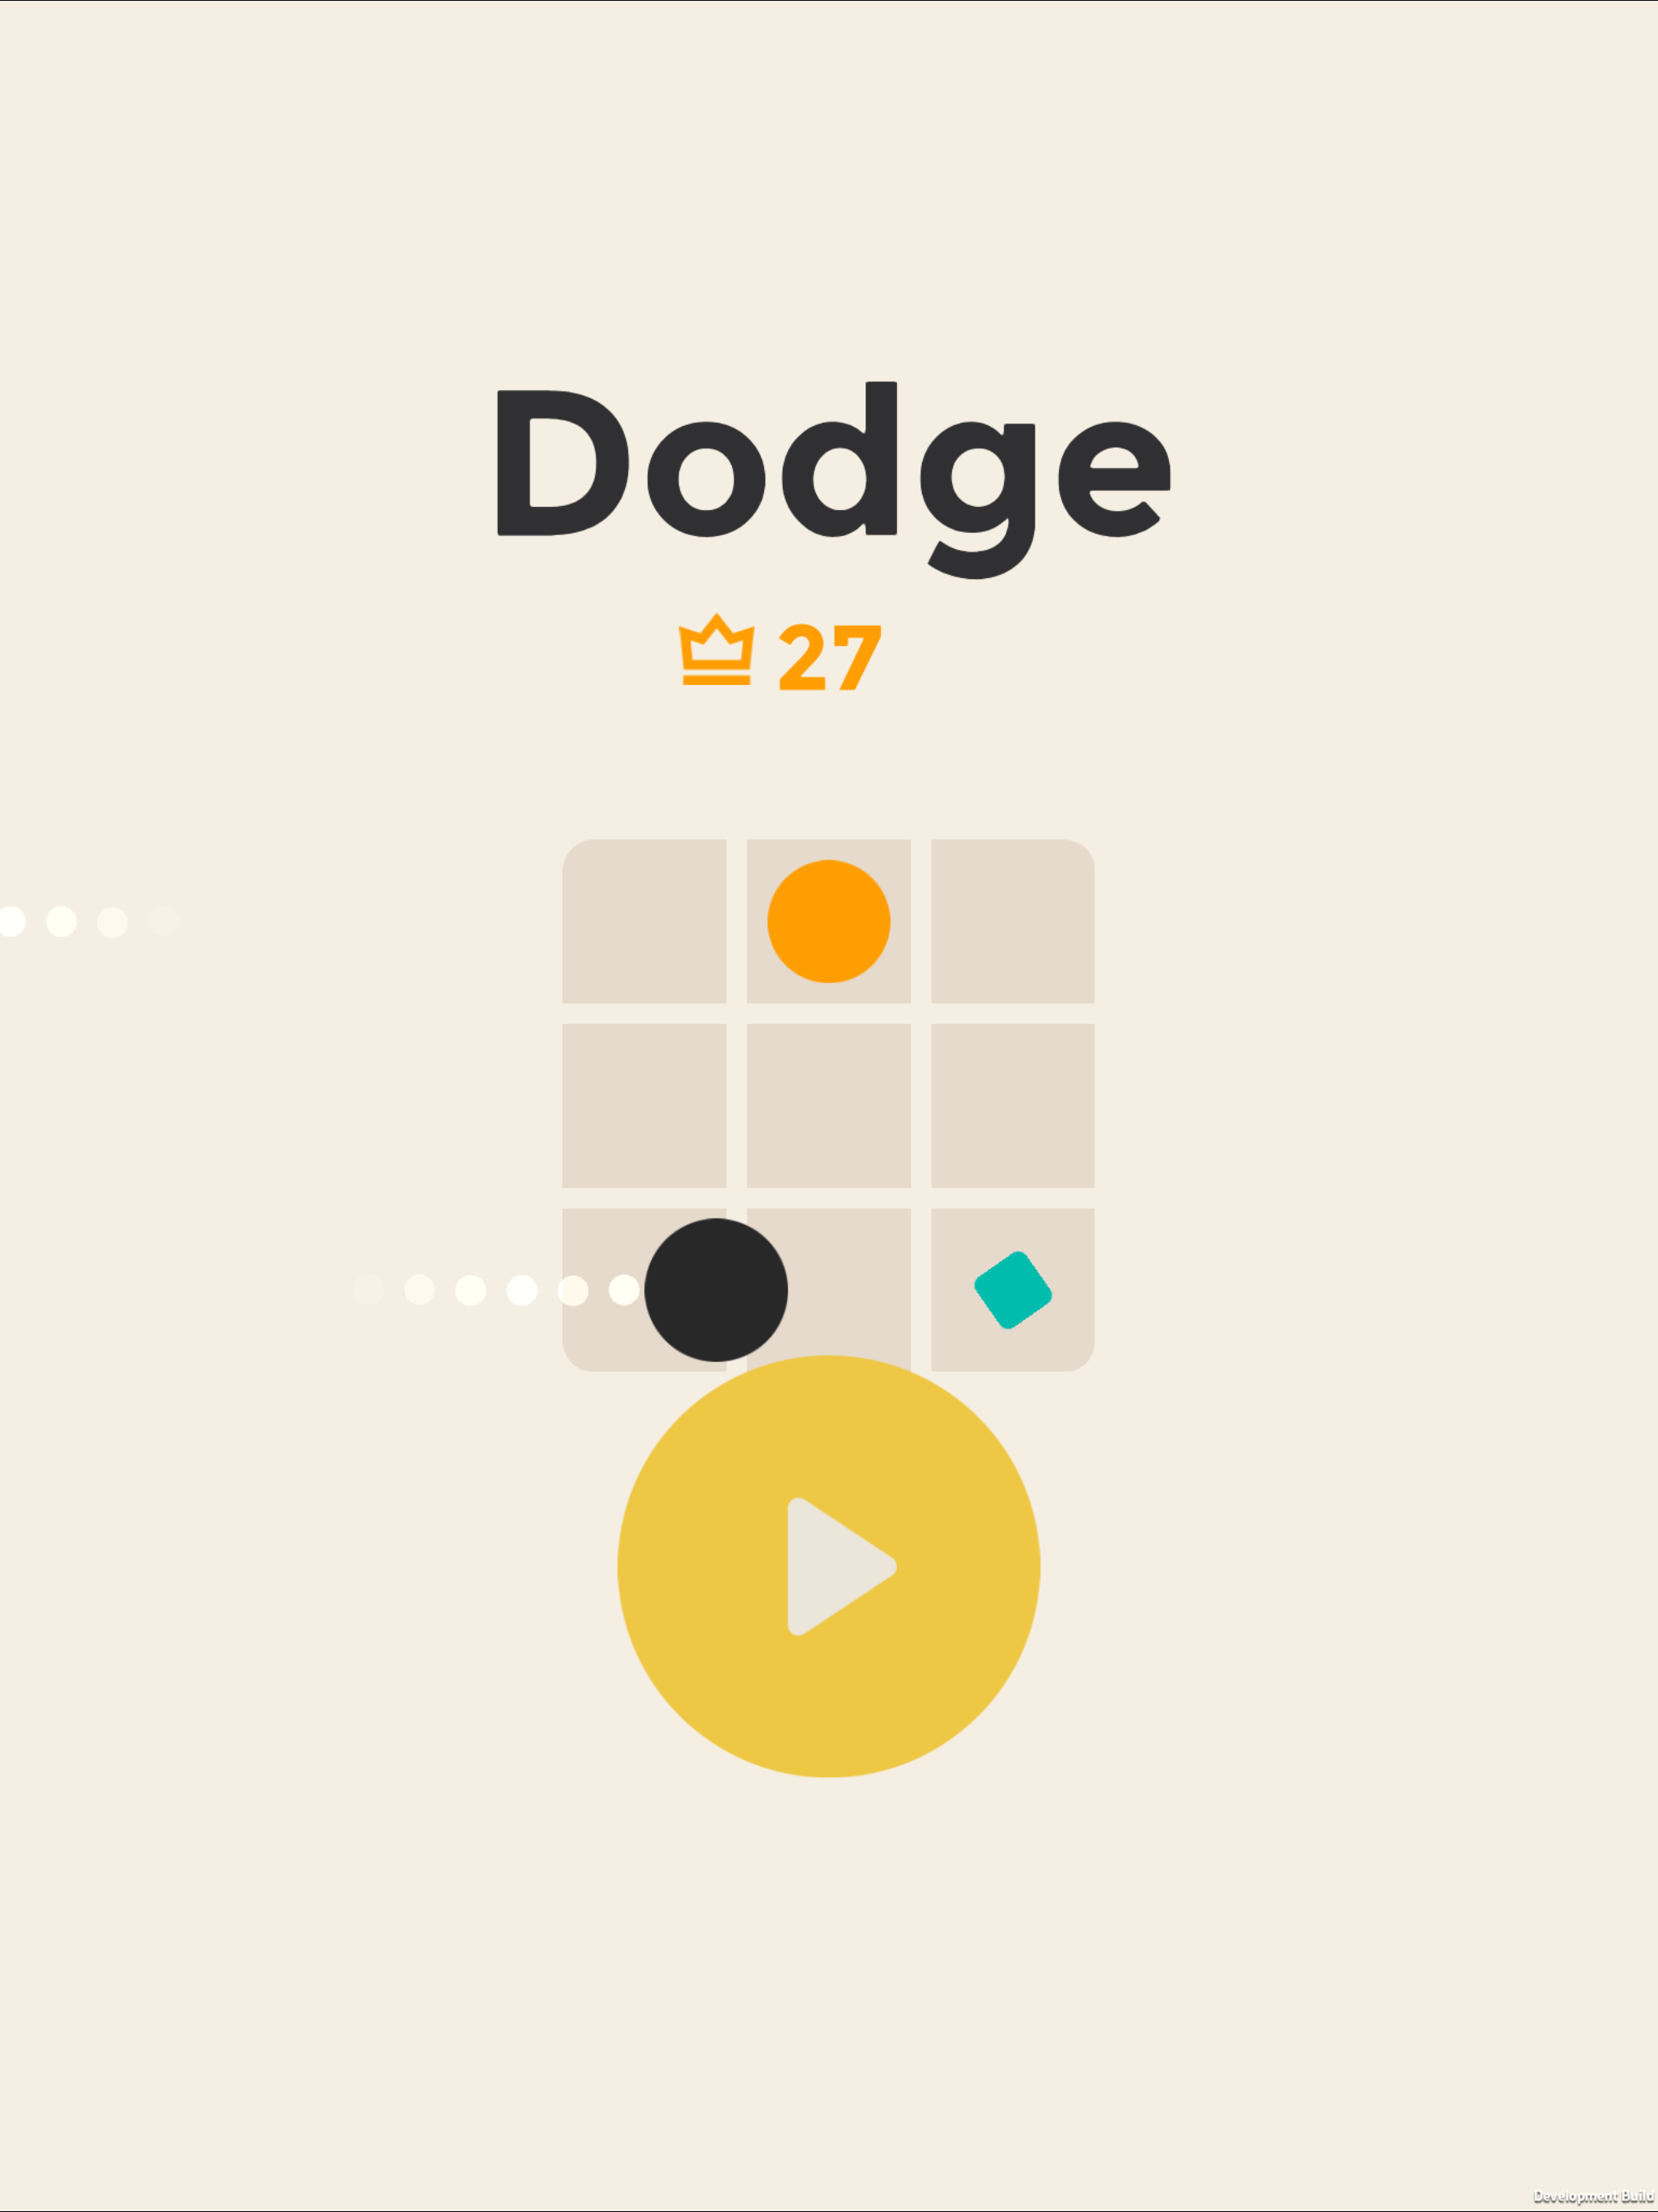 Dodge - Swipe Action Game screenshot game